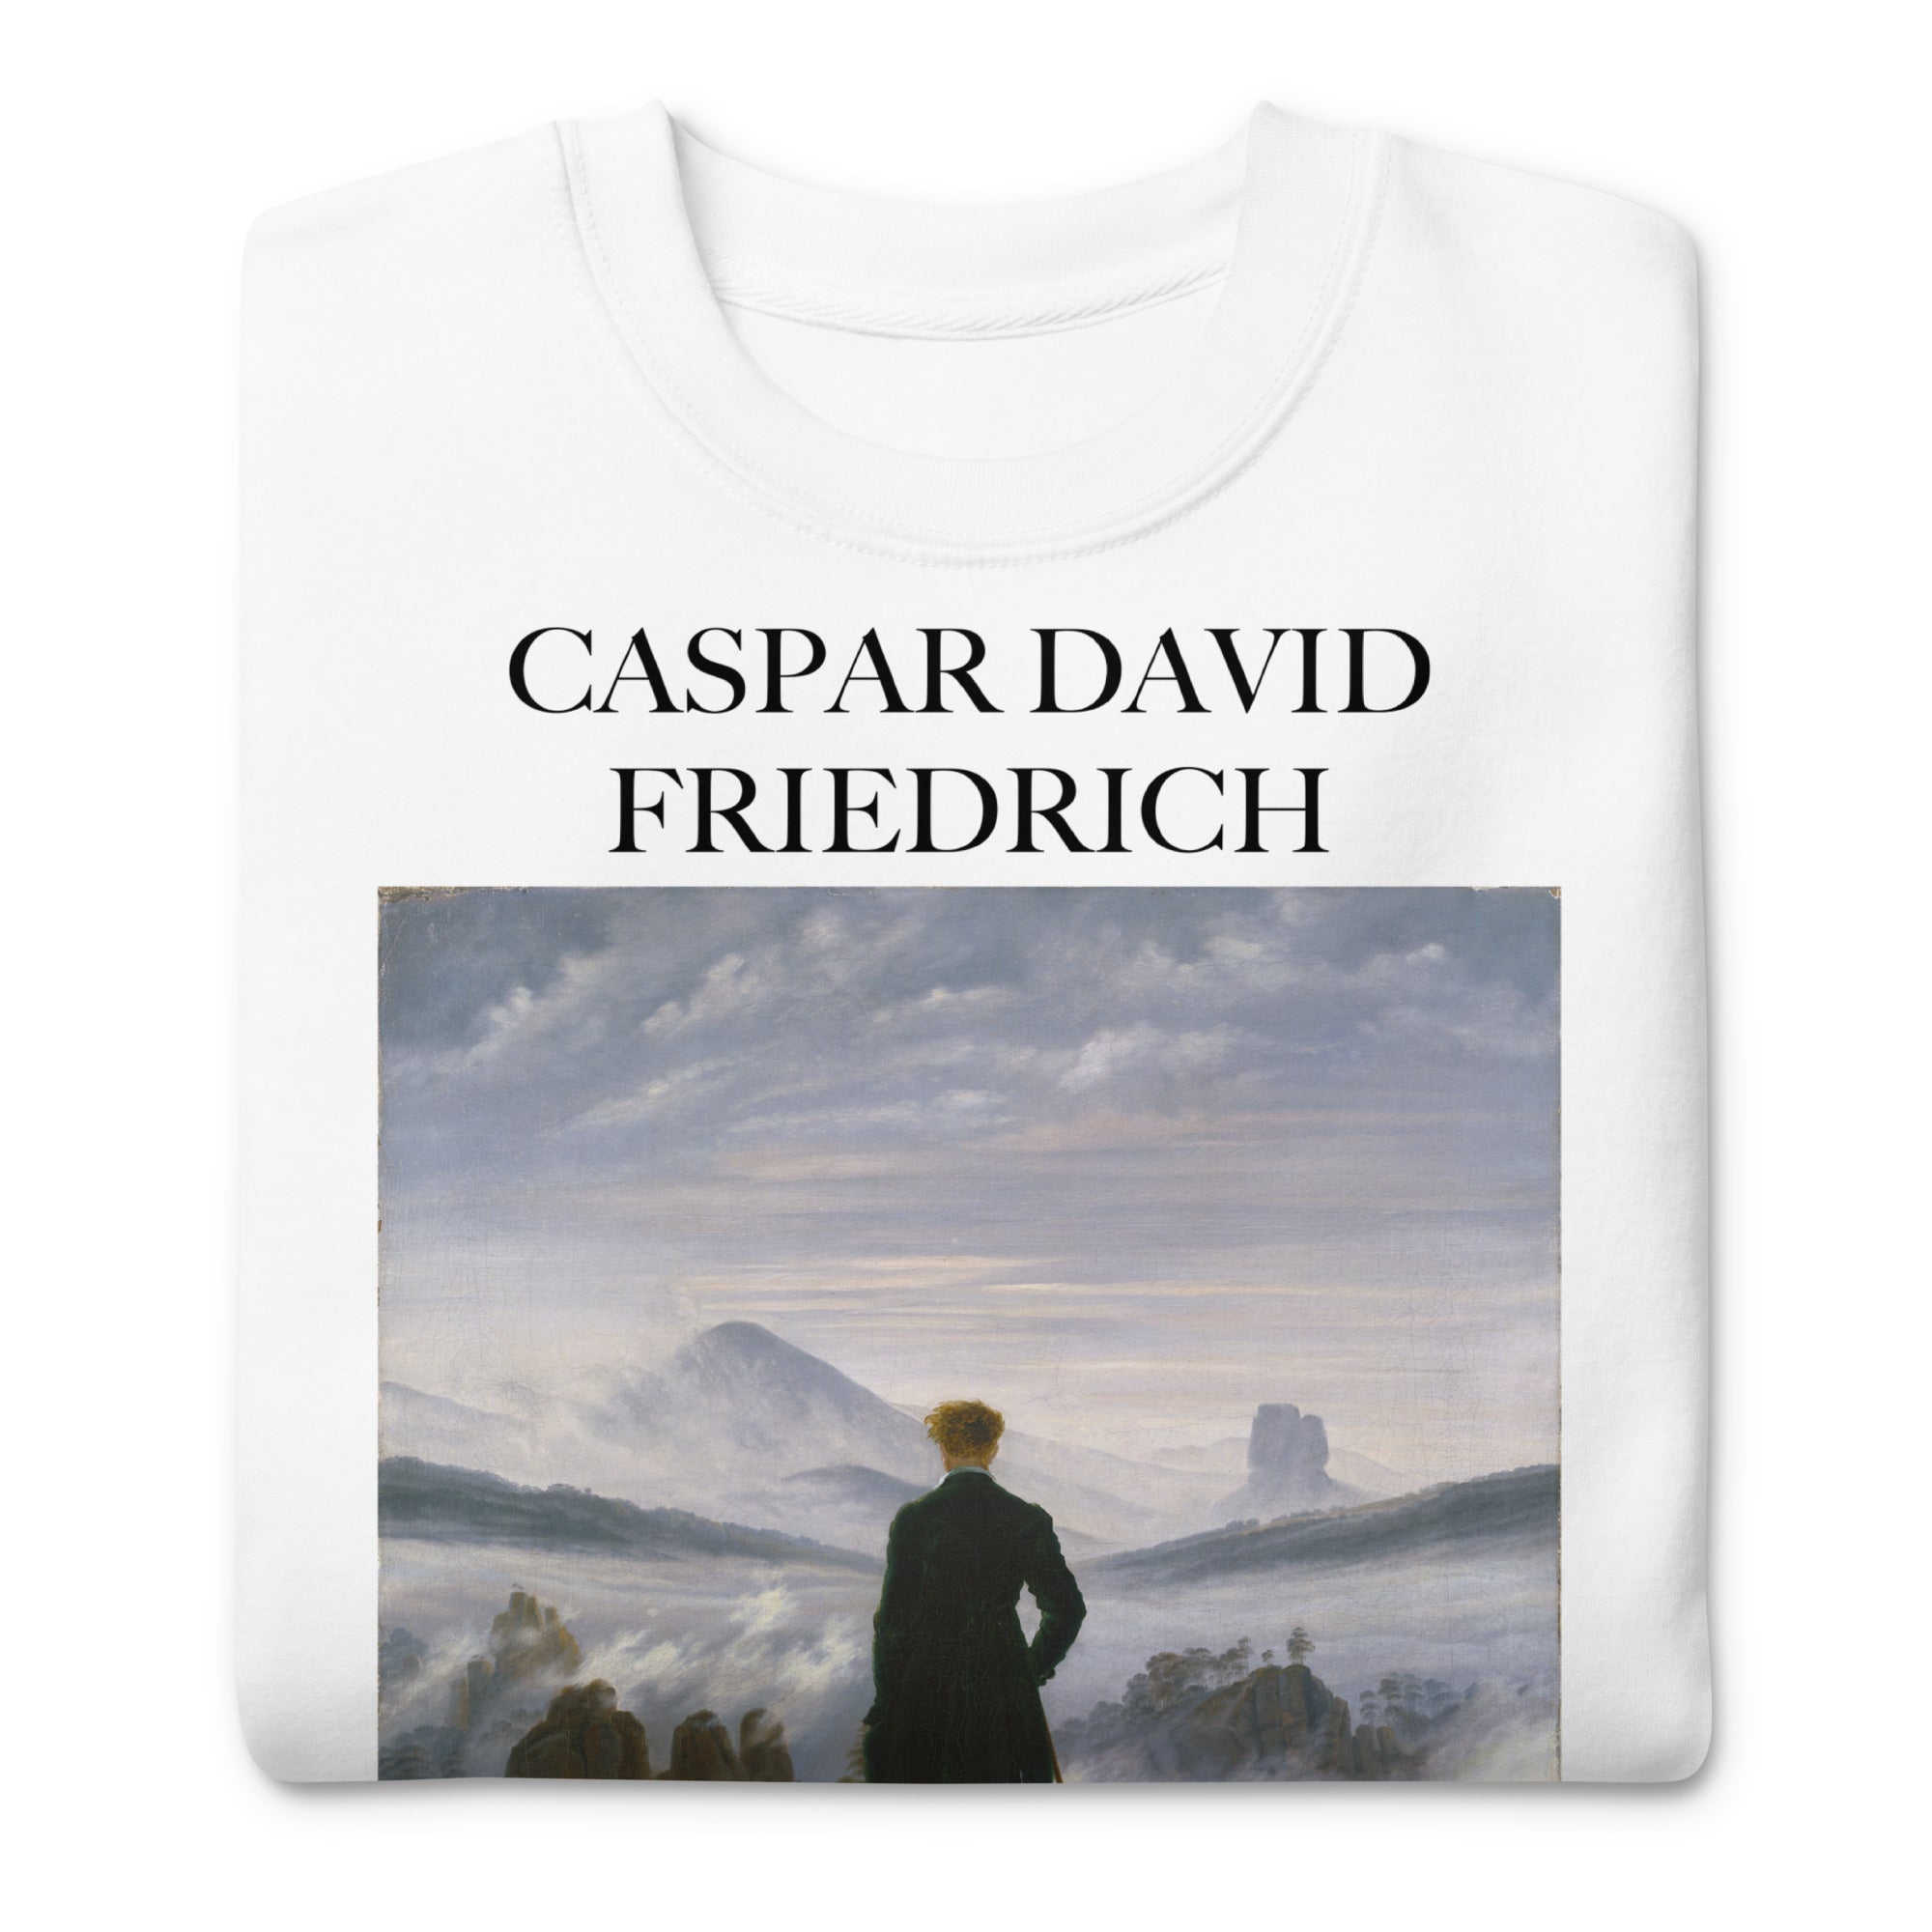 Caspar David Friedrich 'Wanderer Above the Sea of Fog' Famous Painting Sweatshirt | Unisex Premium Sweatshirt